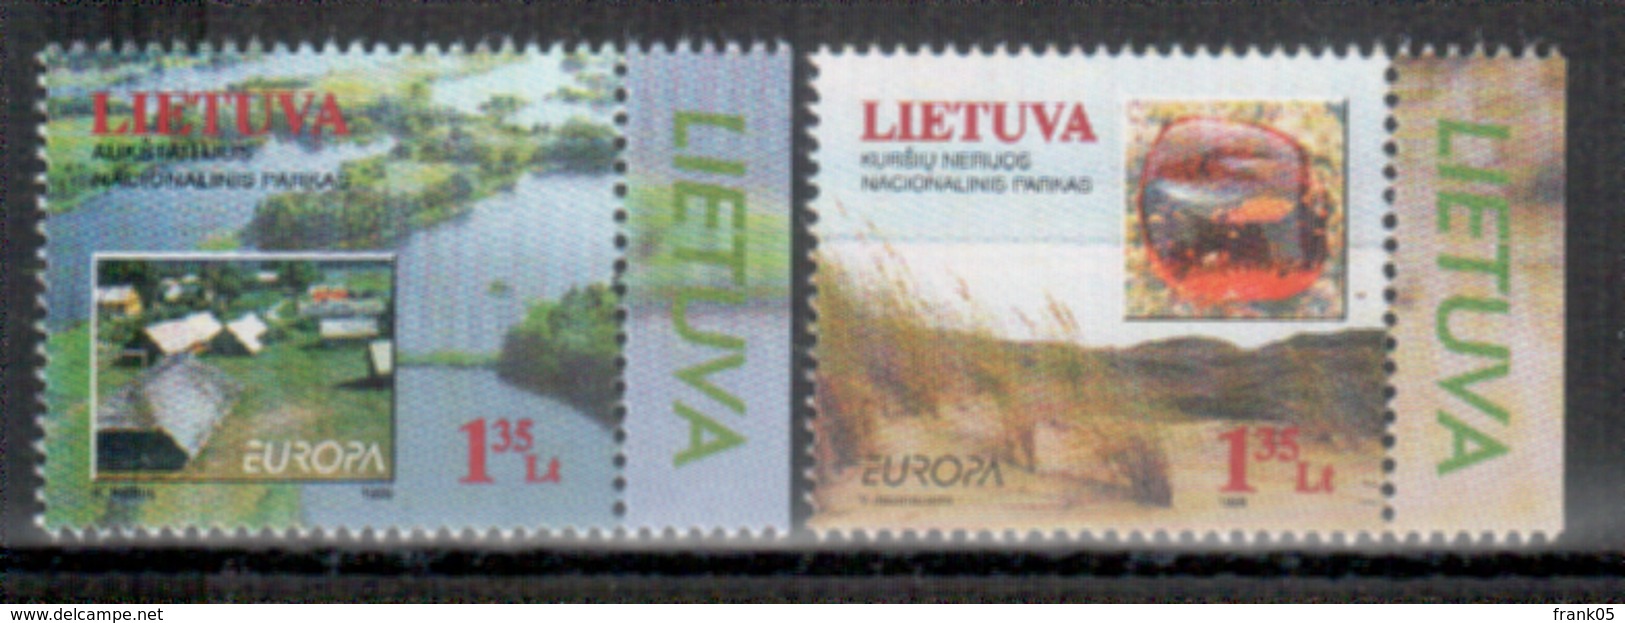 Litauen / Lithuania / Lituanie 1999 Satz/set EUROPA ** - 1999